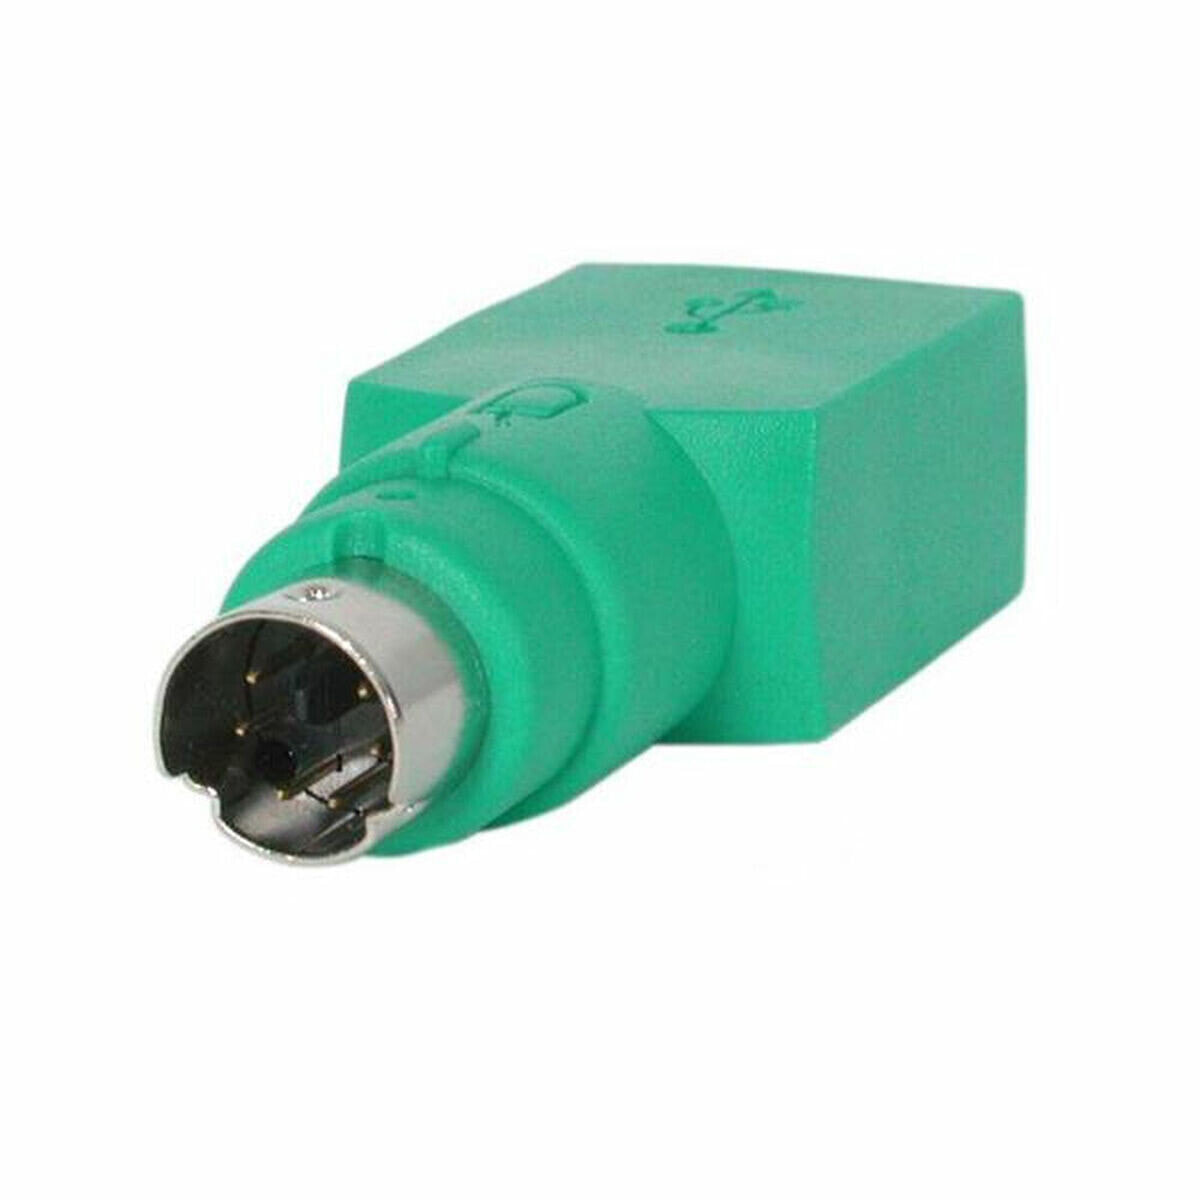 PS/2 to USB adapter Startech GC46FM Green